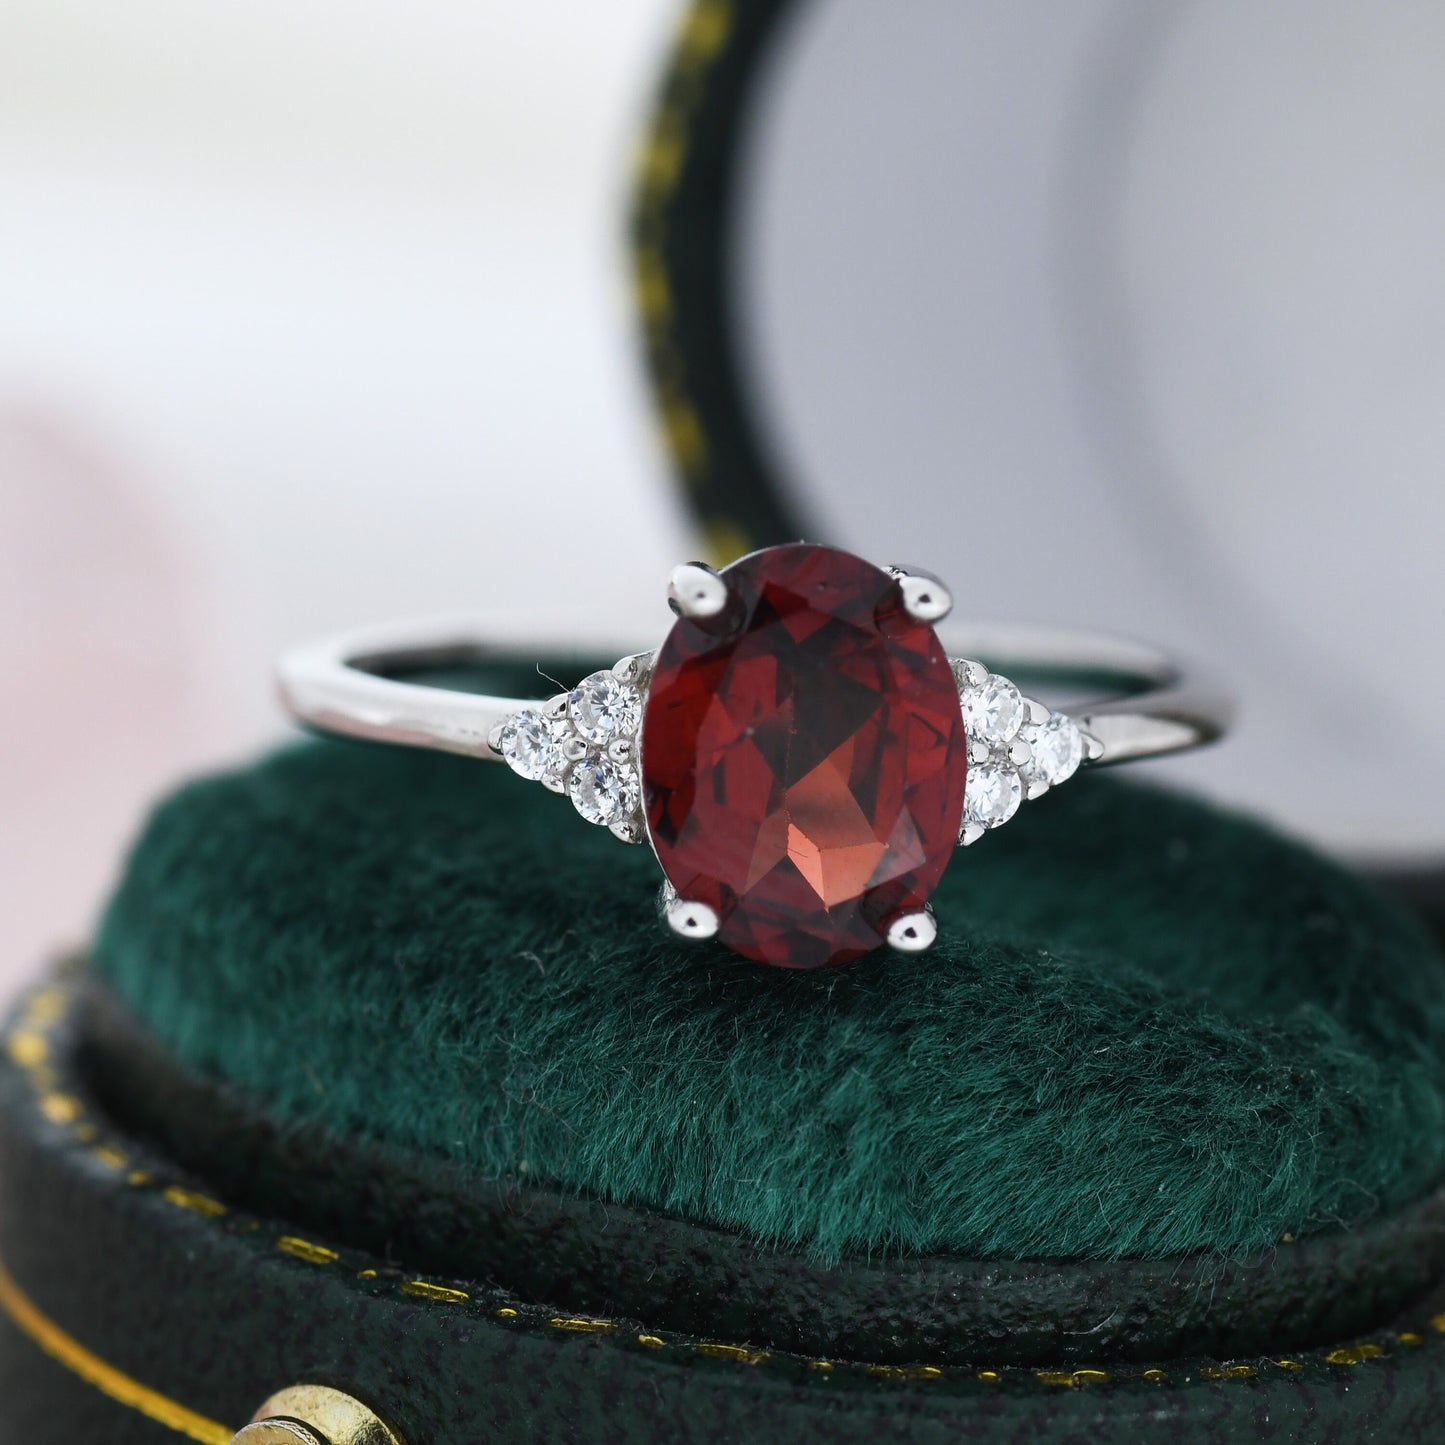 Genuine Garnet Oval Ring in Sterling Silver, Natural Red Garnet Ring, Three CZ, Garnet Crystal, Vintage Inspired Design, US 5 - 8